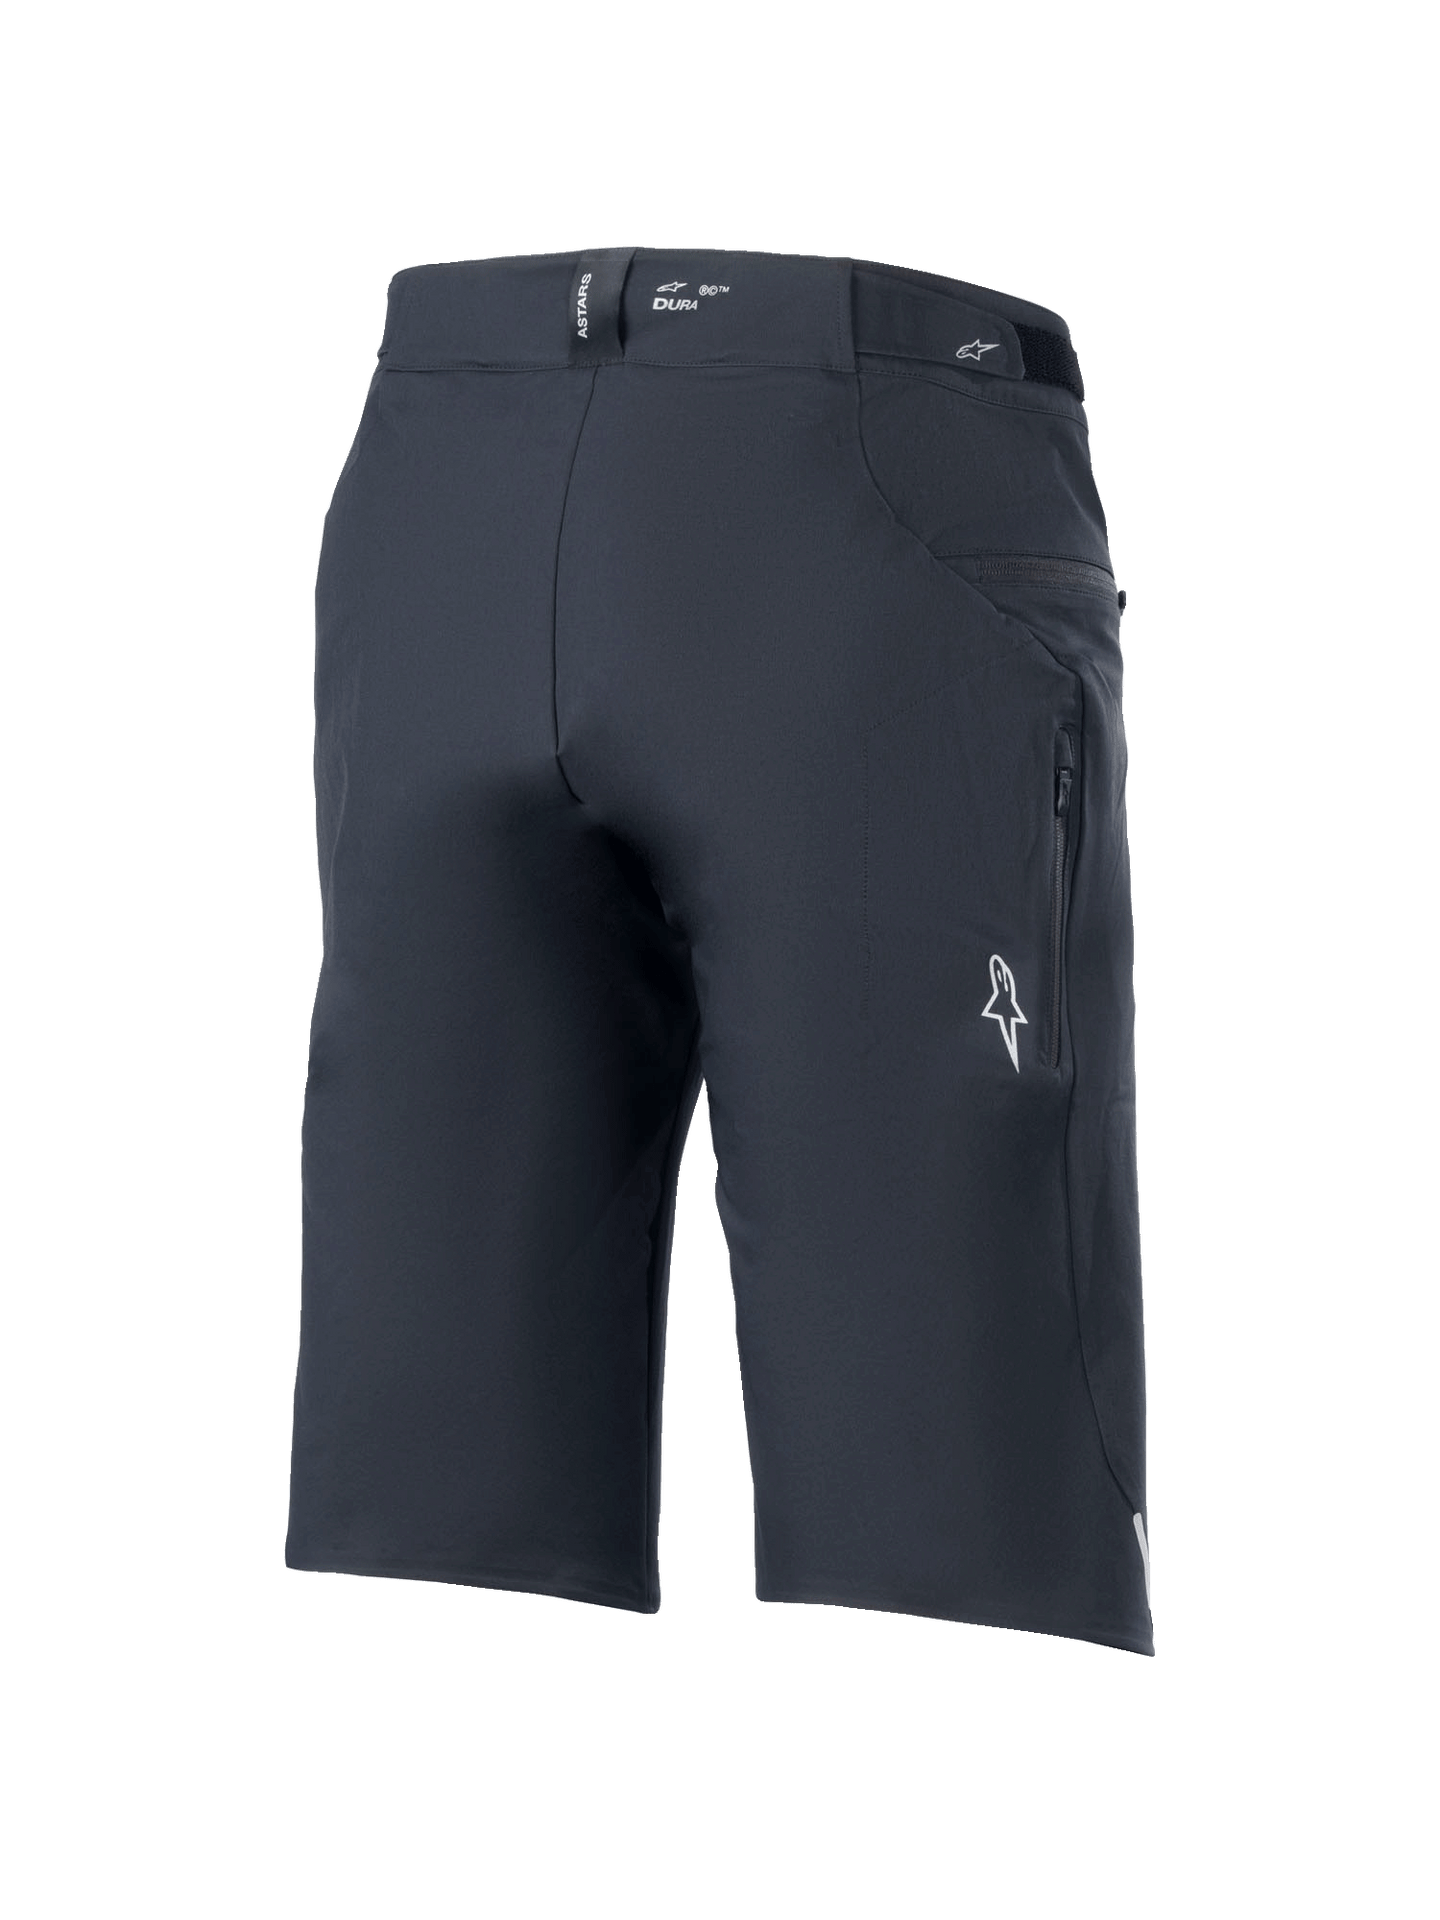 A-Dura Elite Shorts